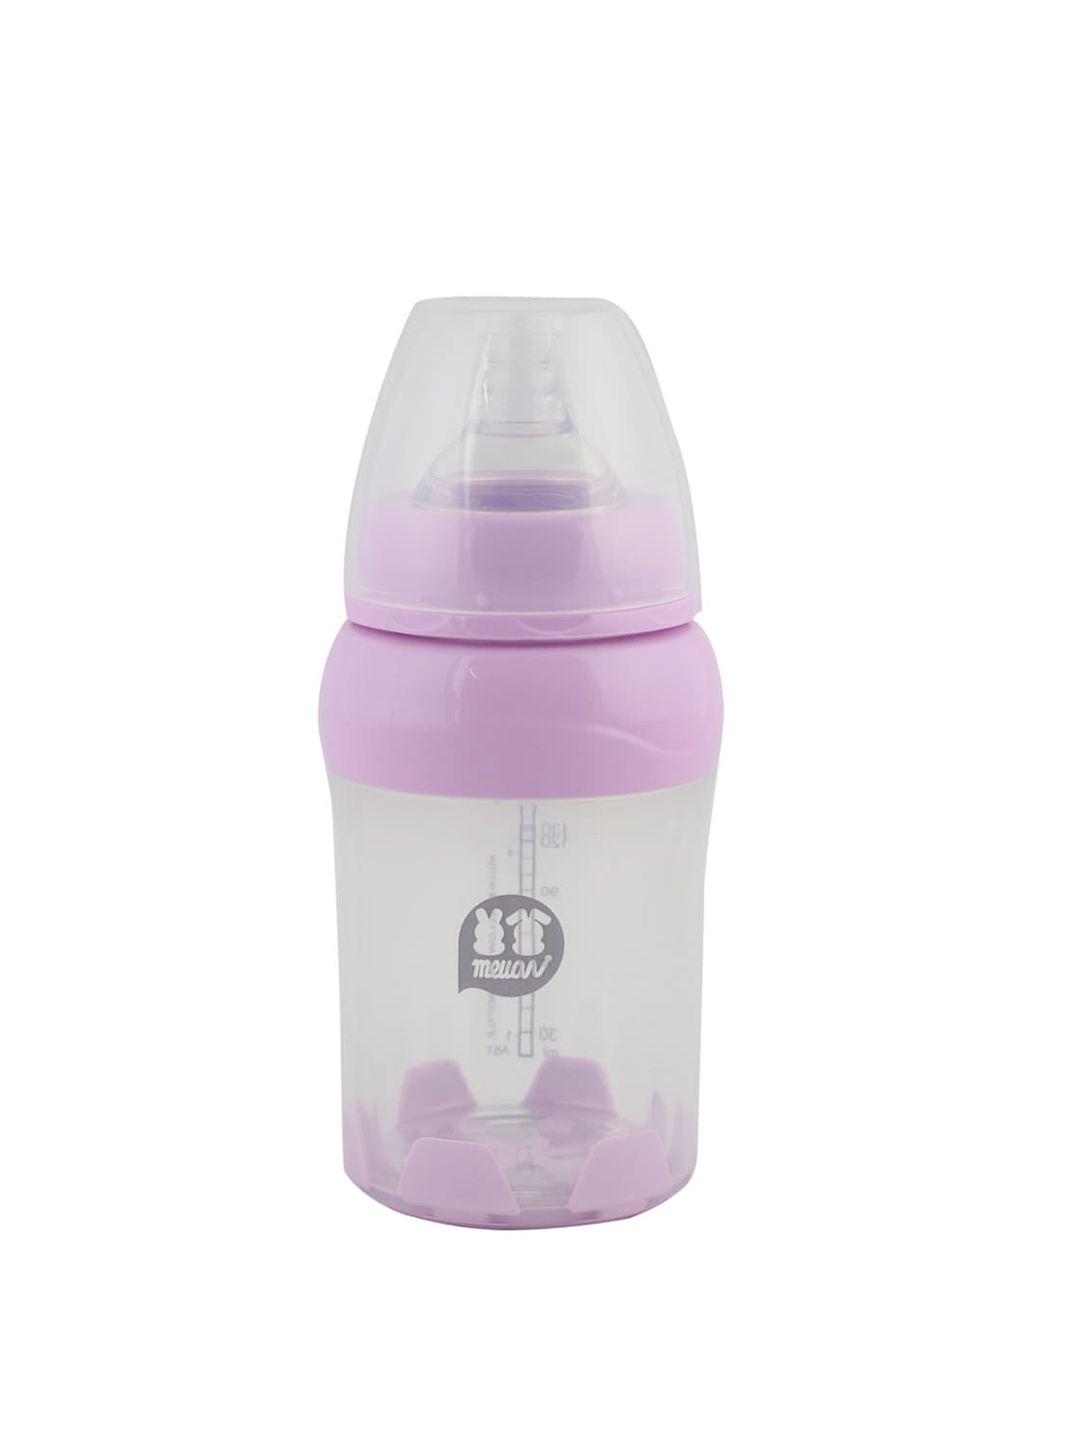 guchigu purple baby bpa free feeding bottles with handle 160ml - 9015c